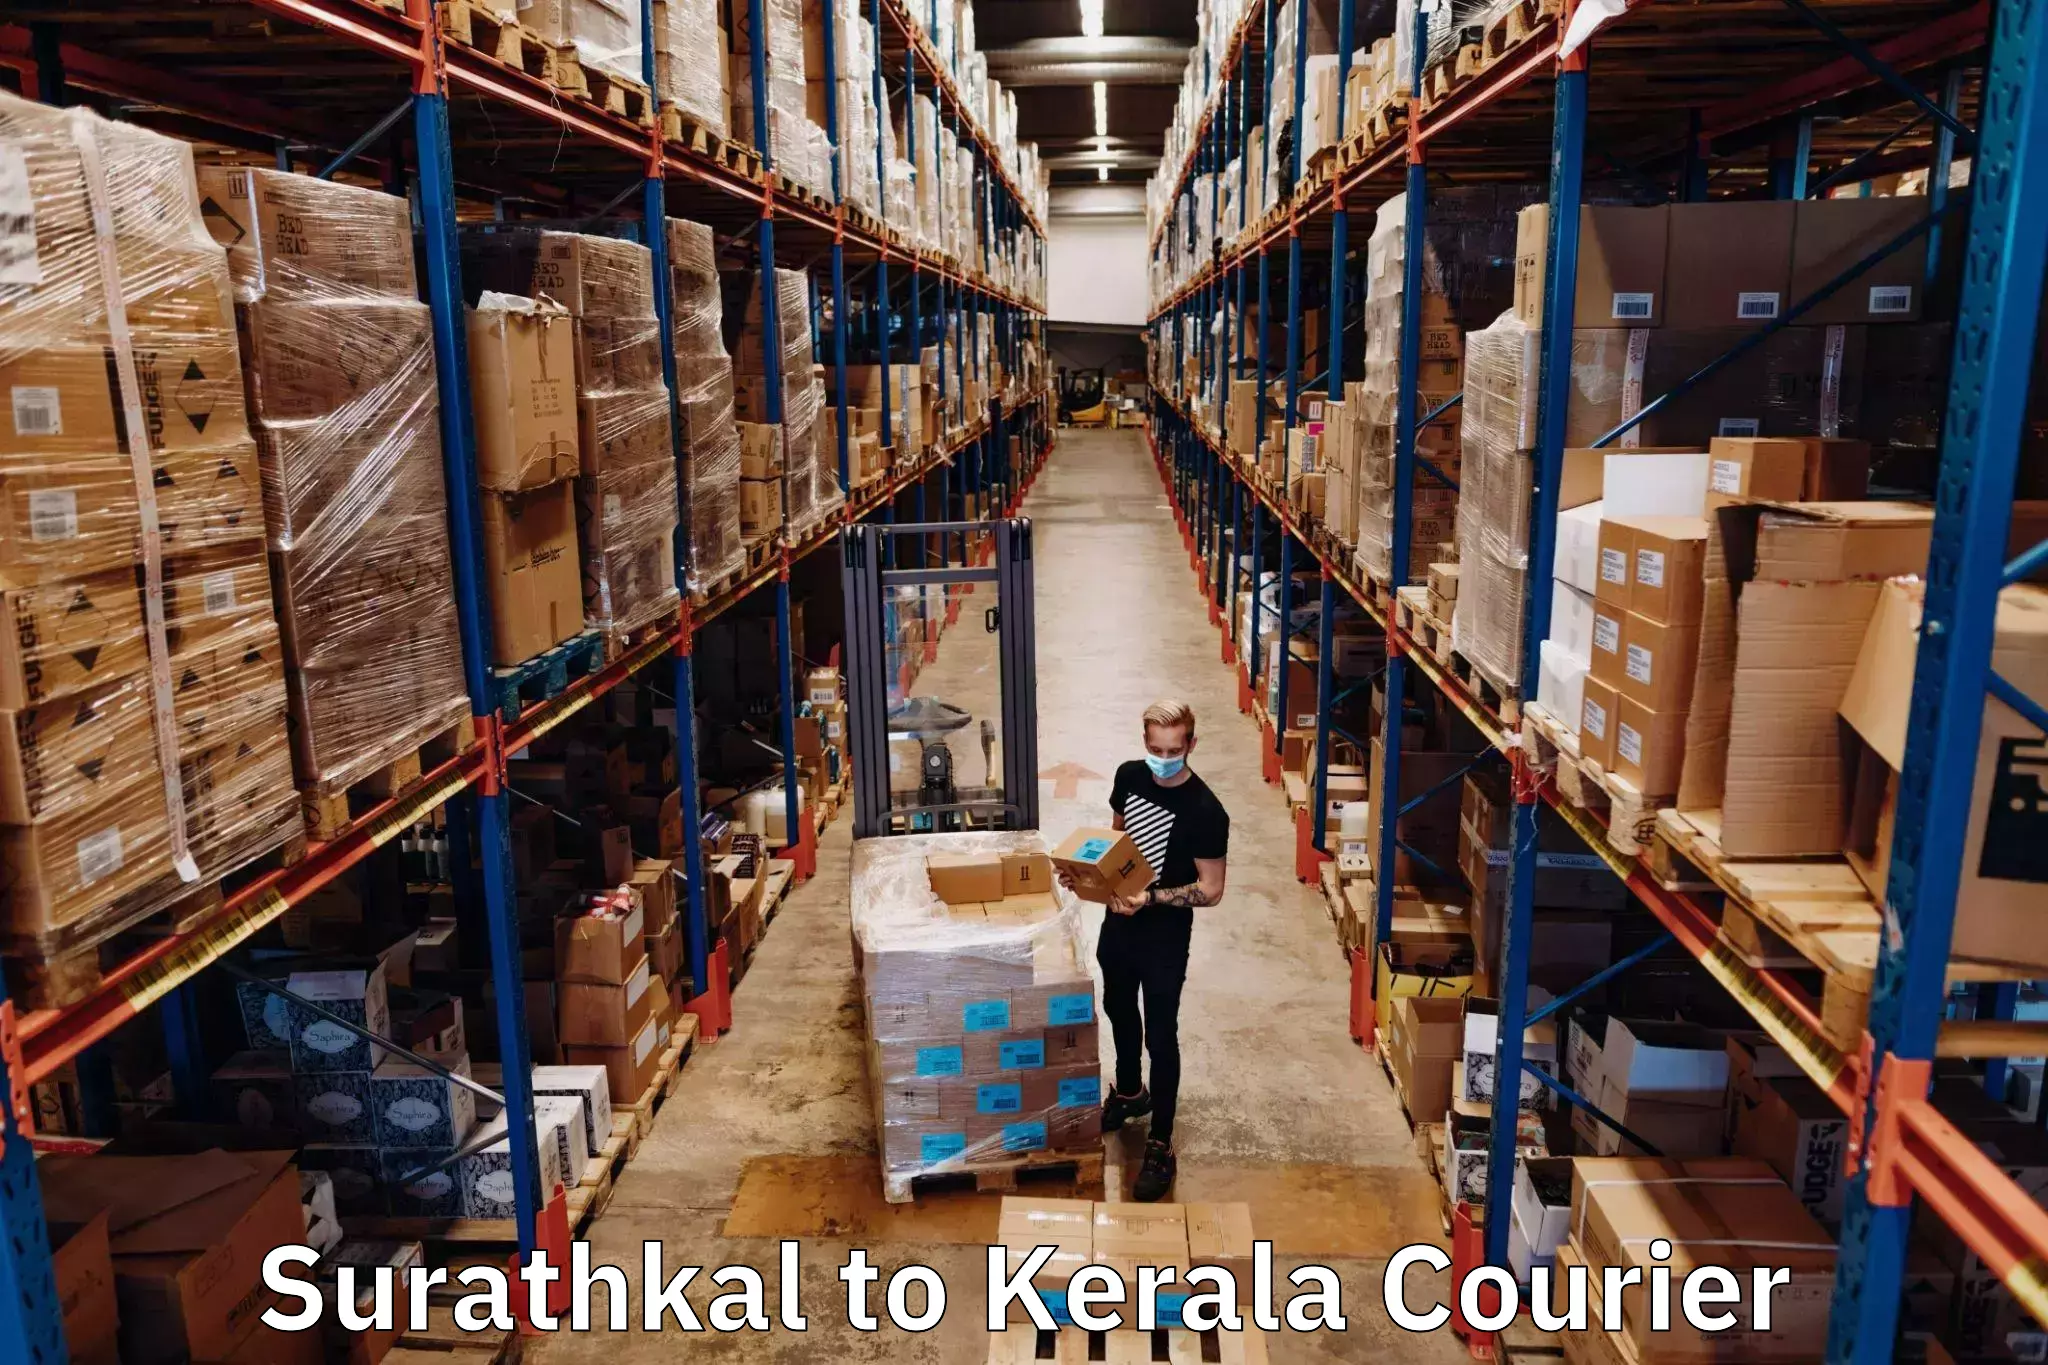 Courier service comparison Surathkal to Kerala